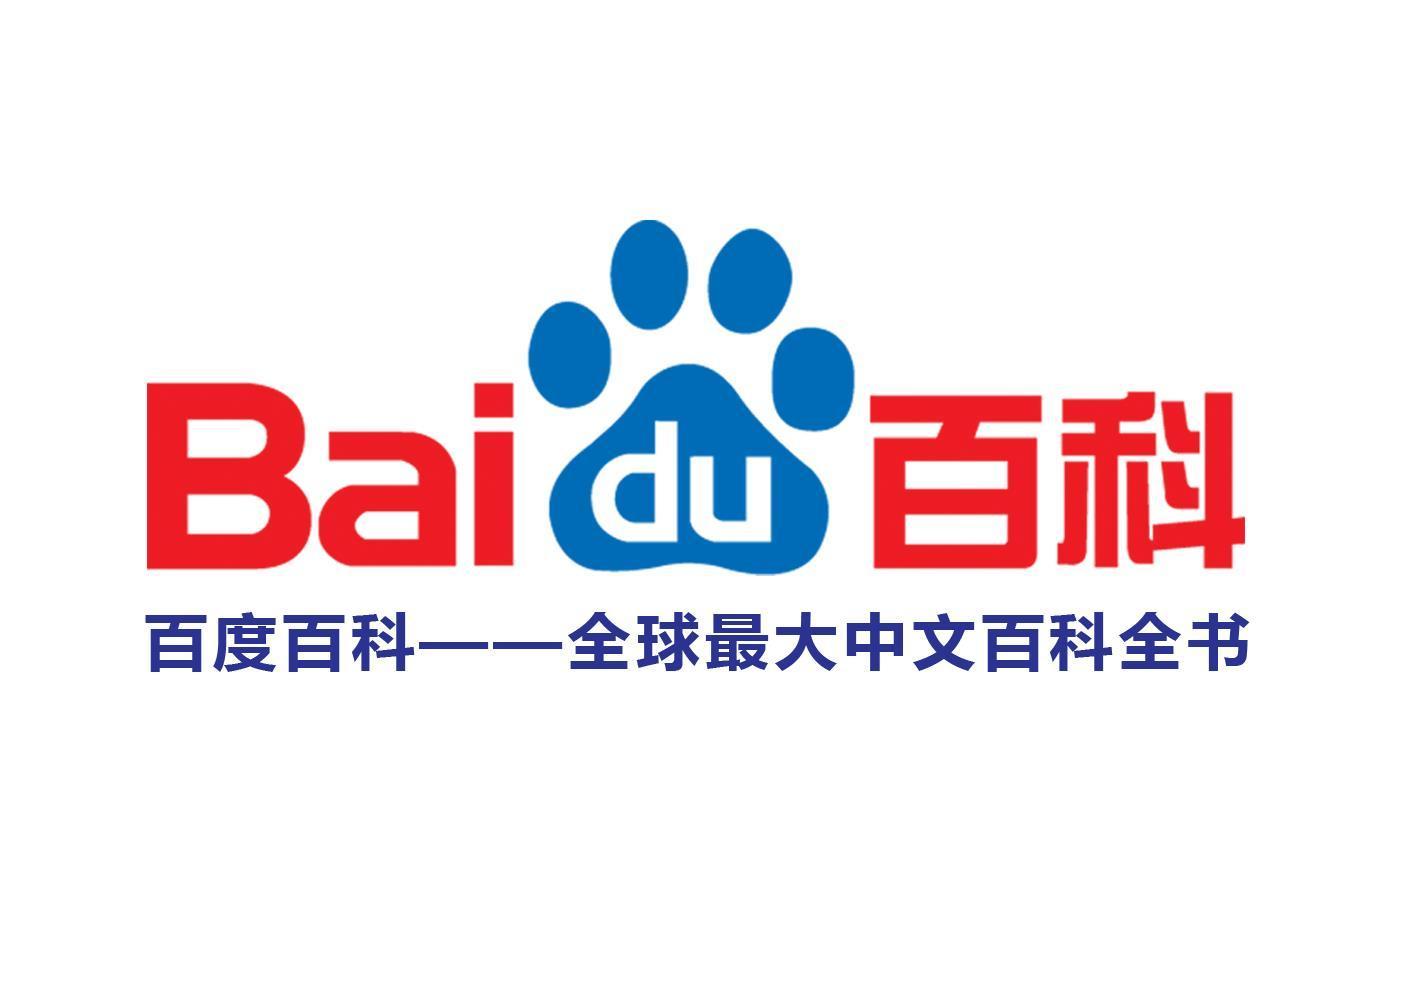 Baidu carlife на русском. Baidu логотип. Логотипы китайских фирм. Китайский браузер baidu. Китайские логотипы приложения.